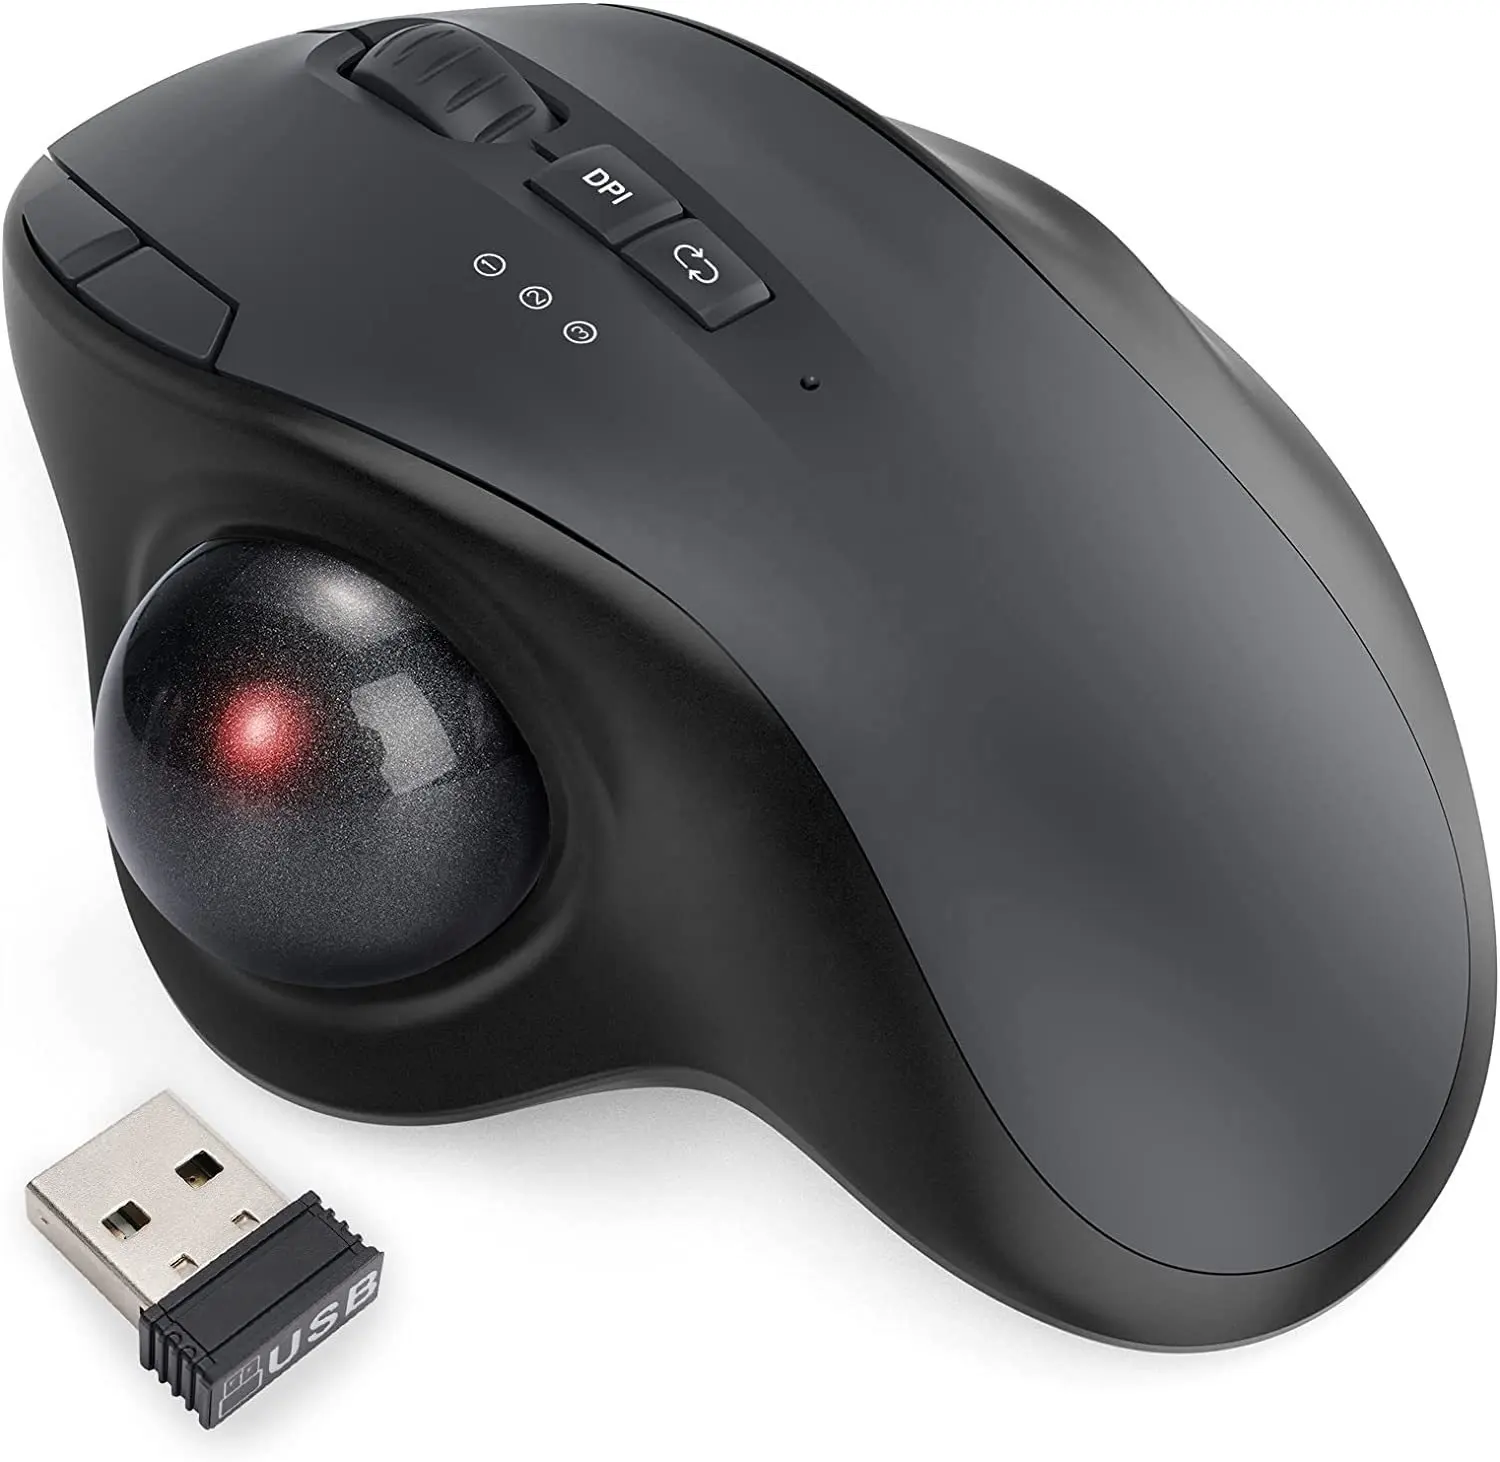 Mouse Trackball Nirkabel ergonomis 2.4g + bt, Mouse Rollerball dapat diisi ulang mudah kontrol jempol 3 Dpi